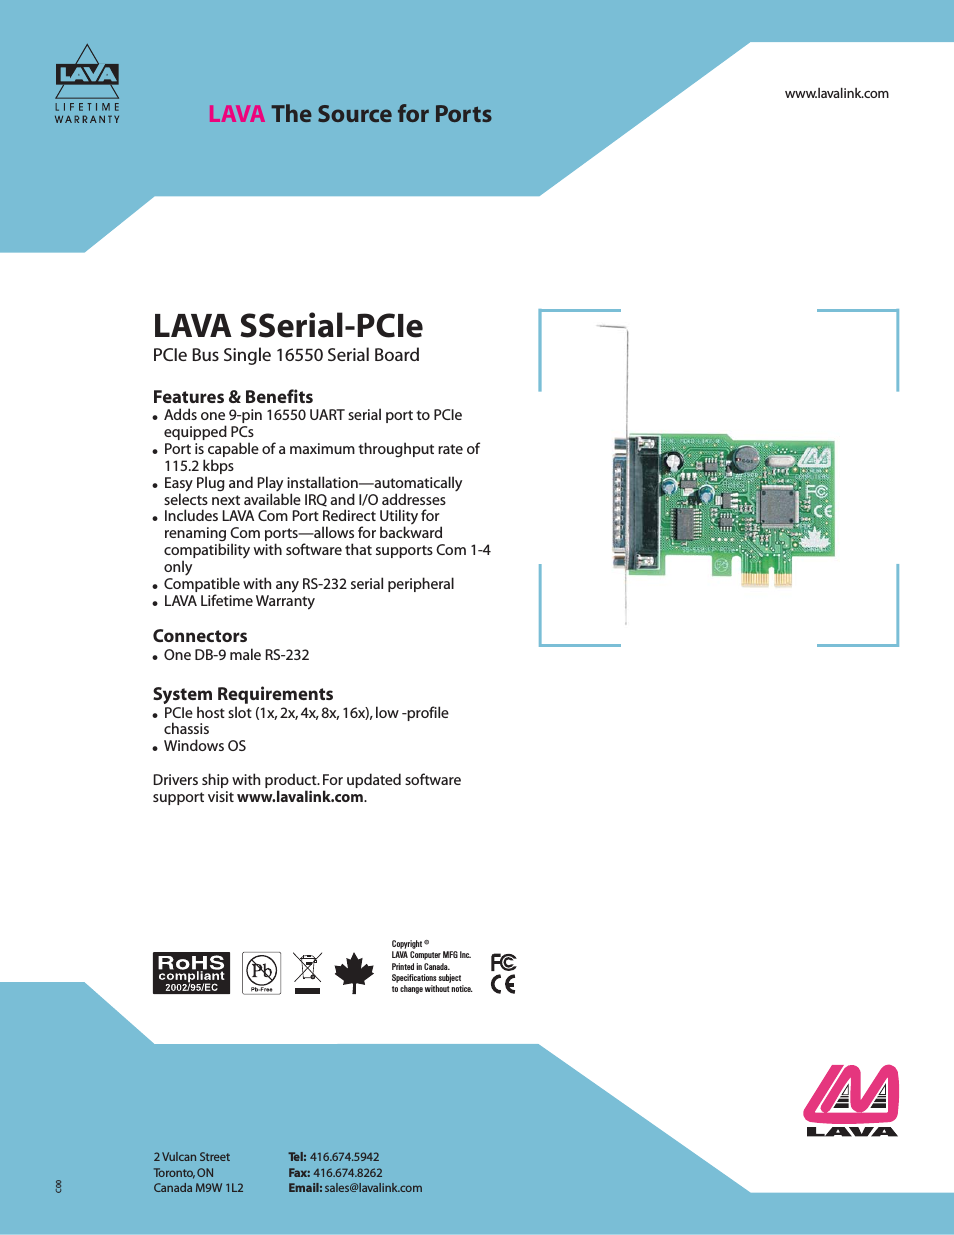 LAVA SSerial-PCIe